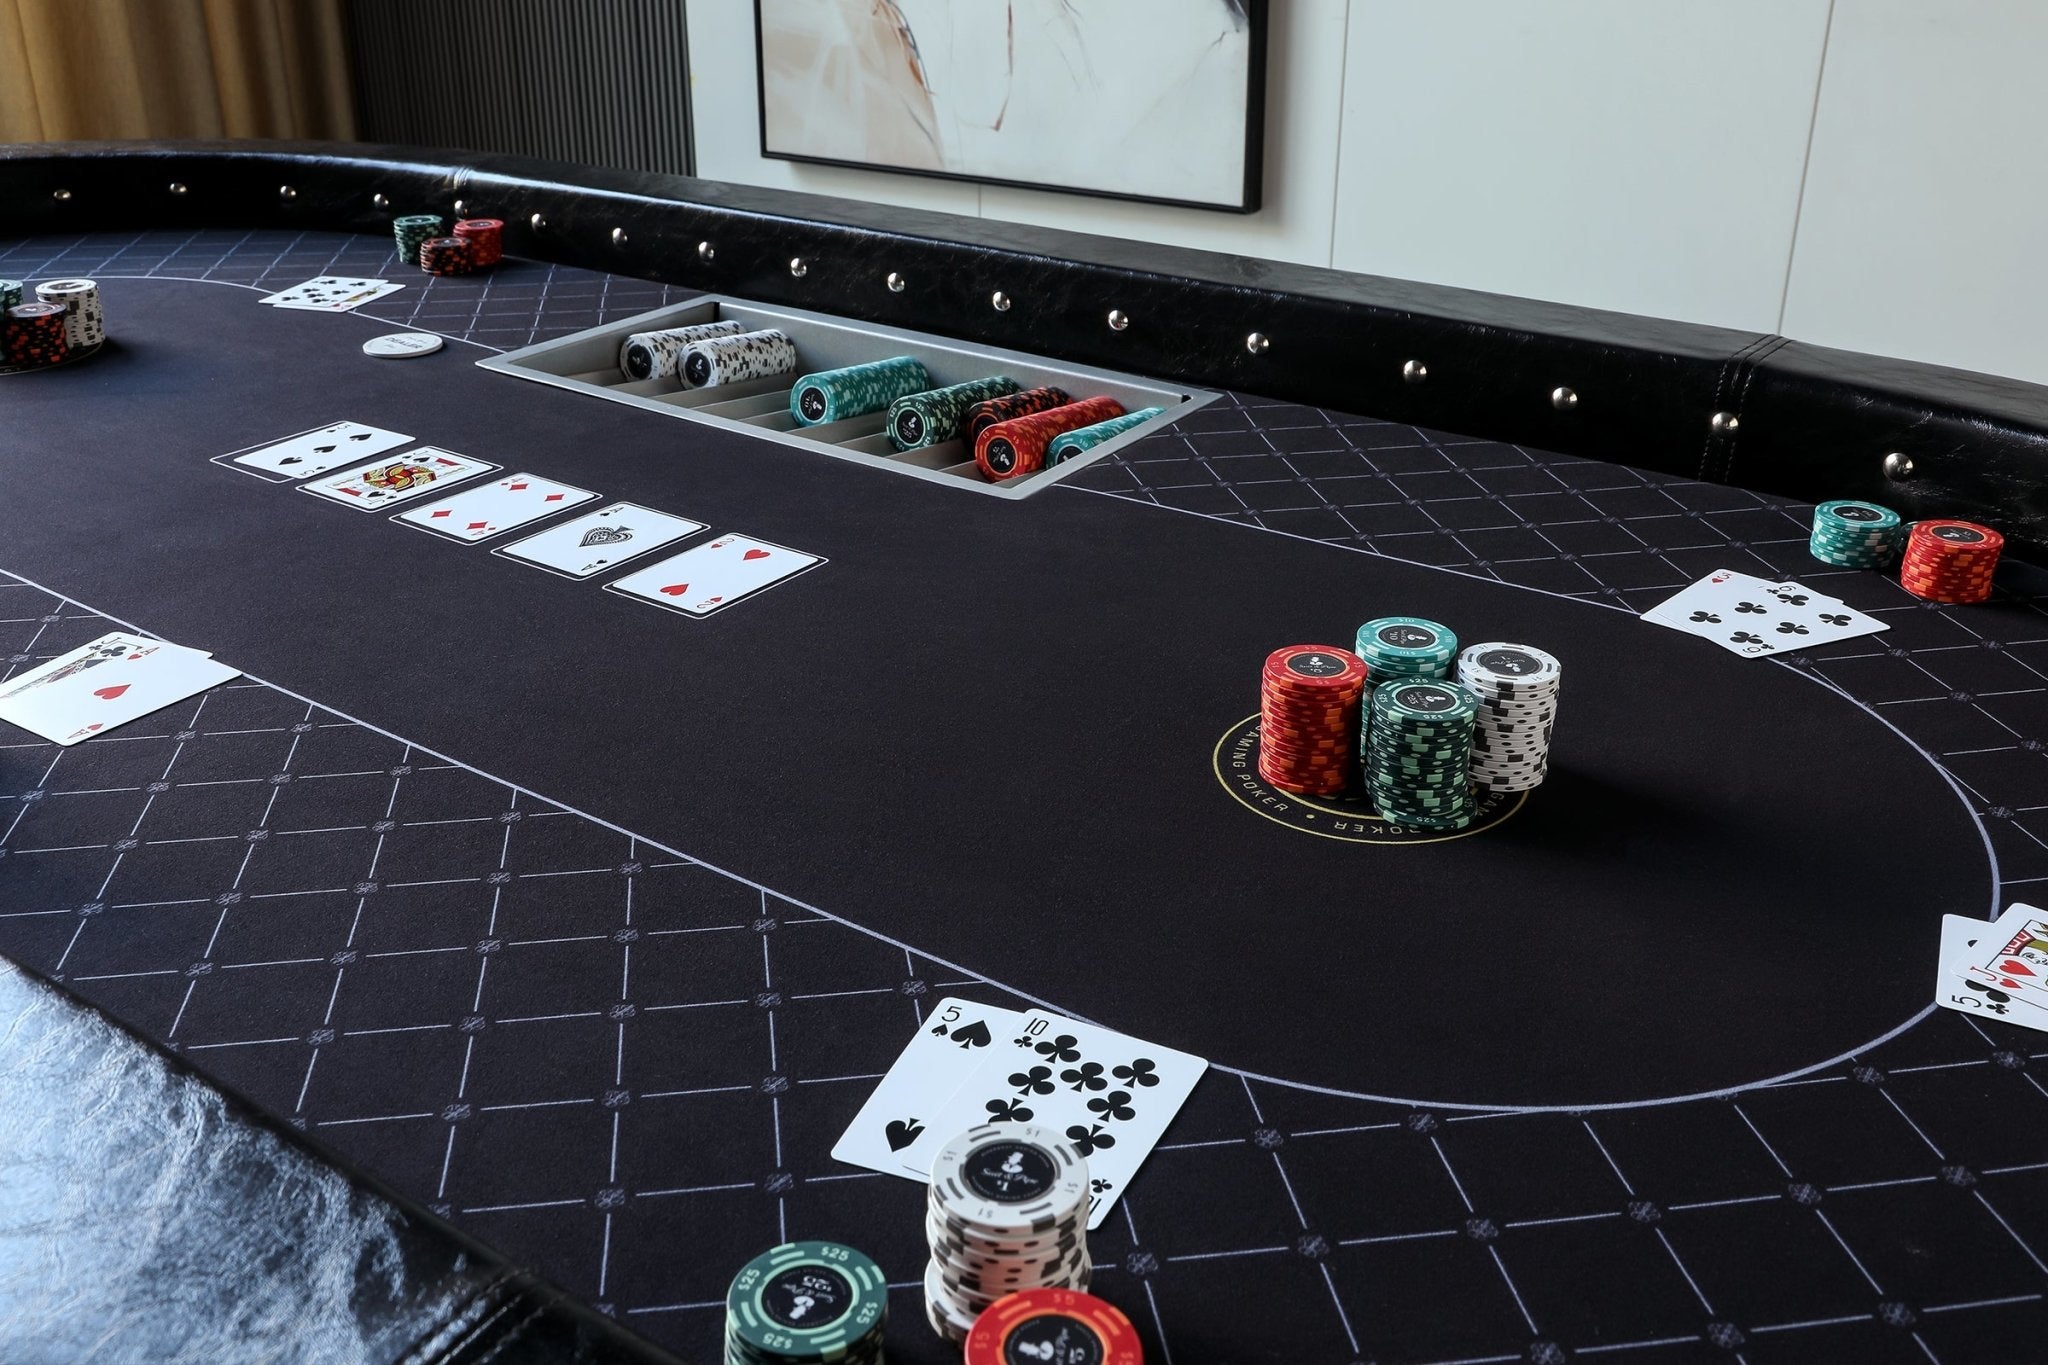 Poker Tables